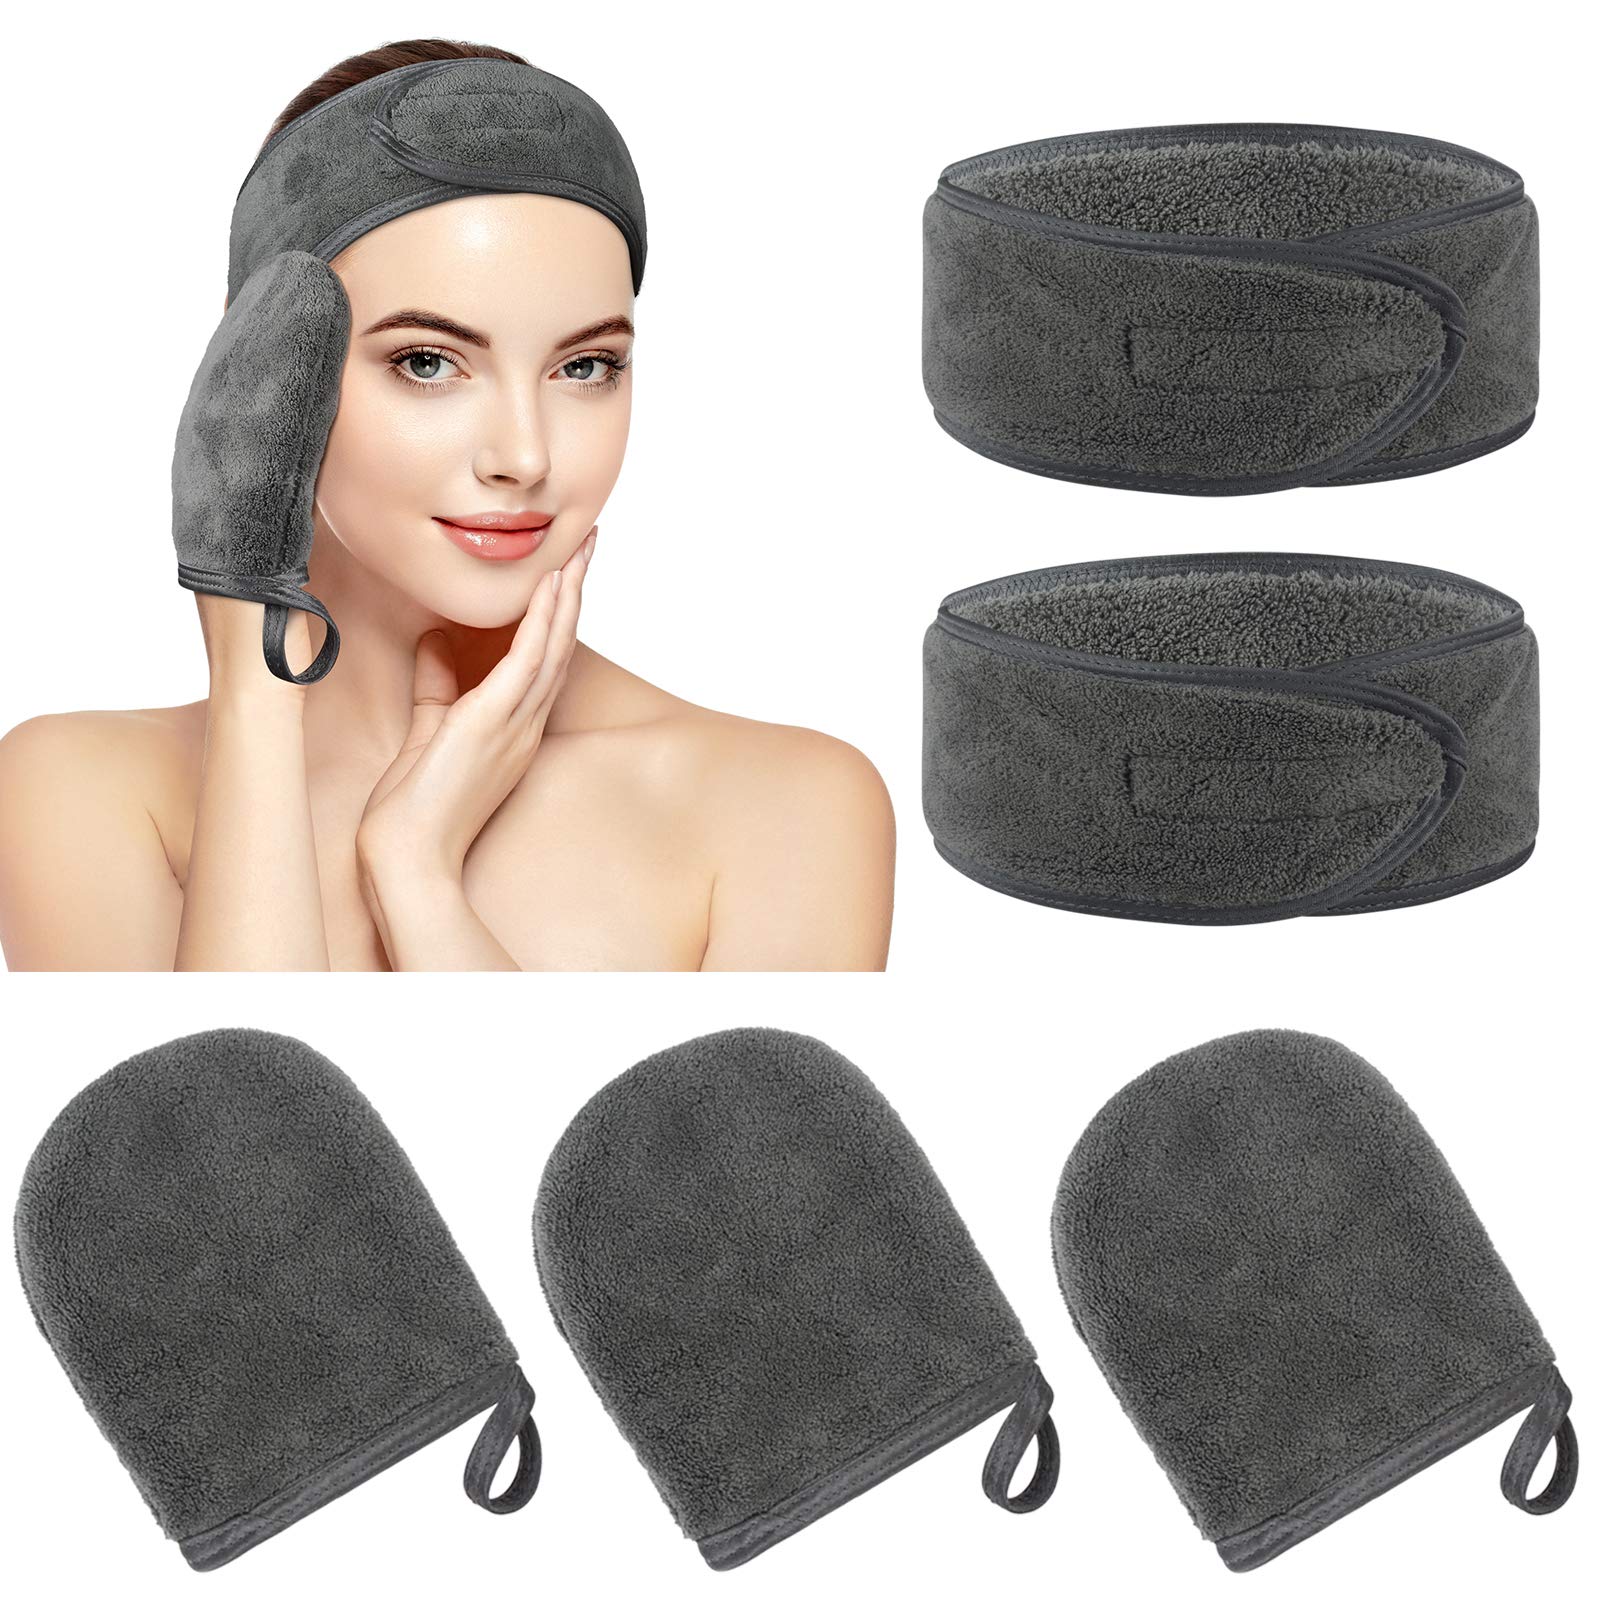 facial mitts with beauty spa headbands